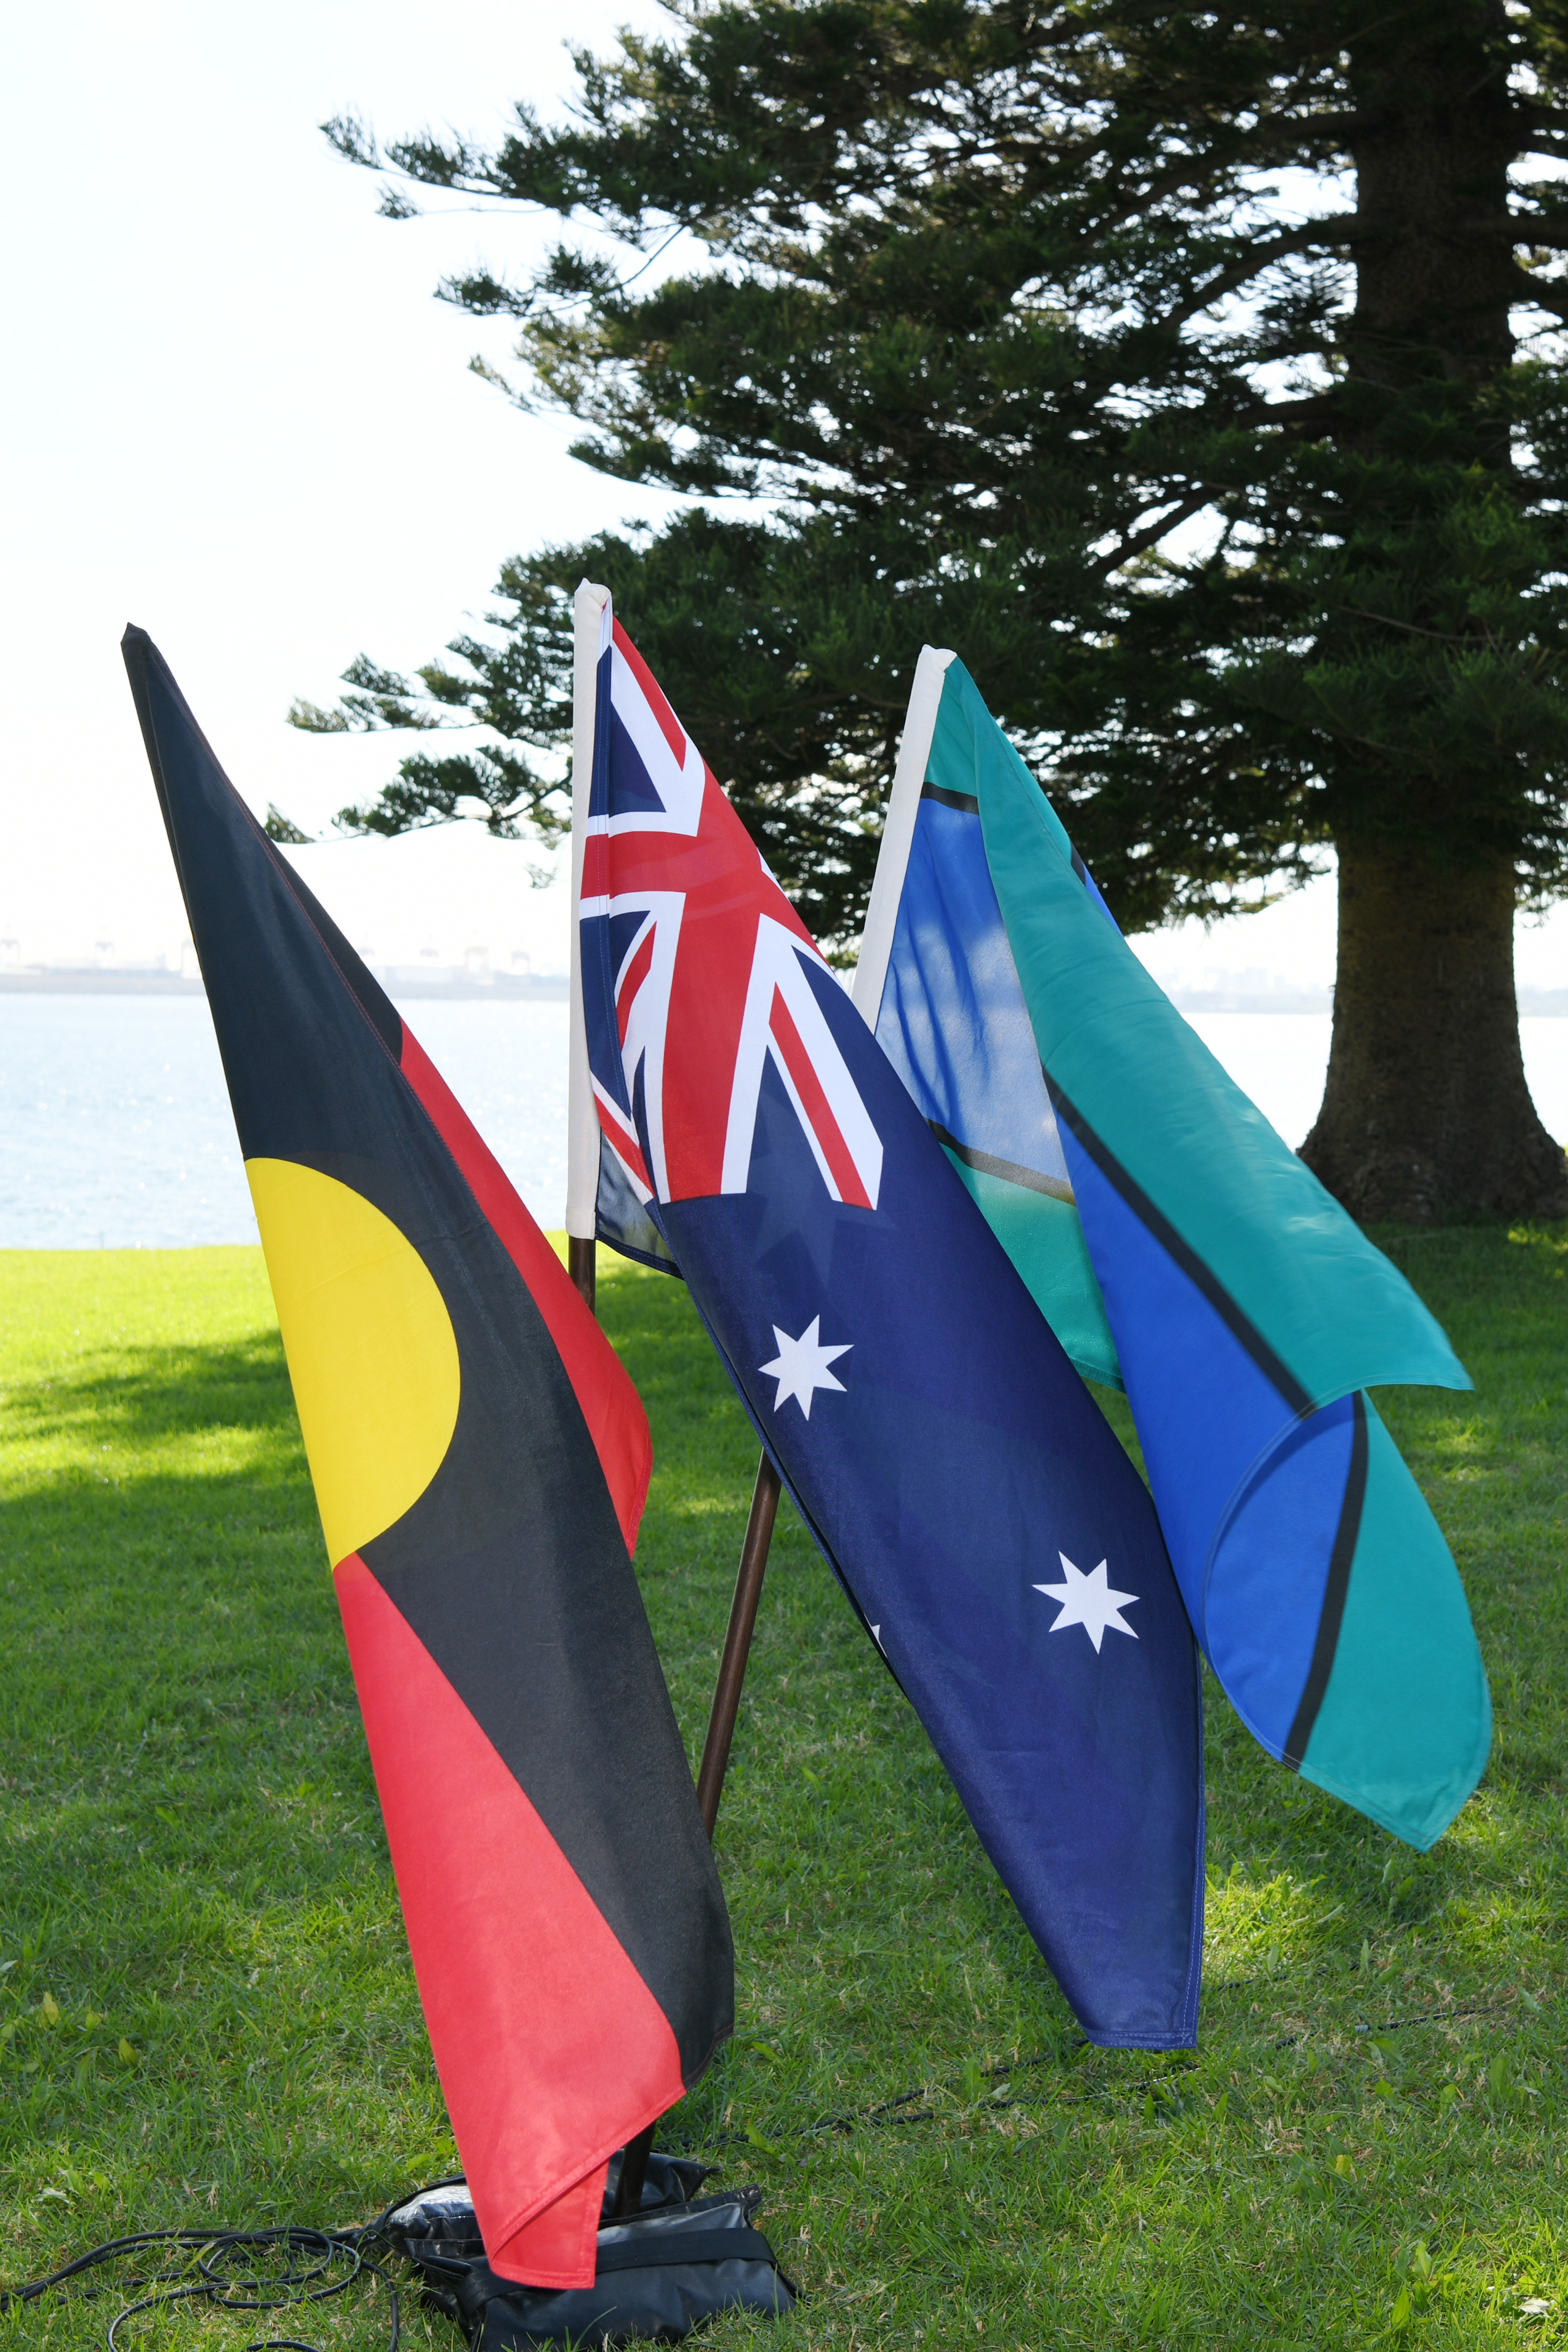 Aboriginal, Australian and Torres Strait Island flags